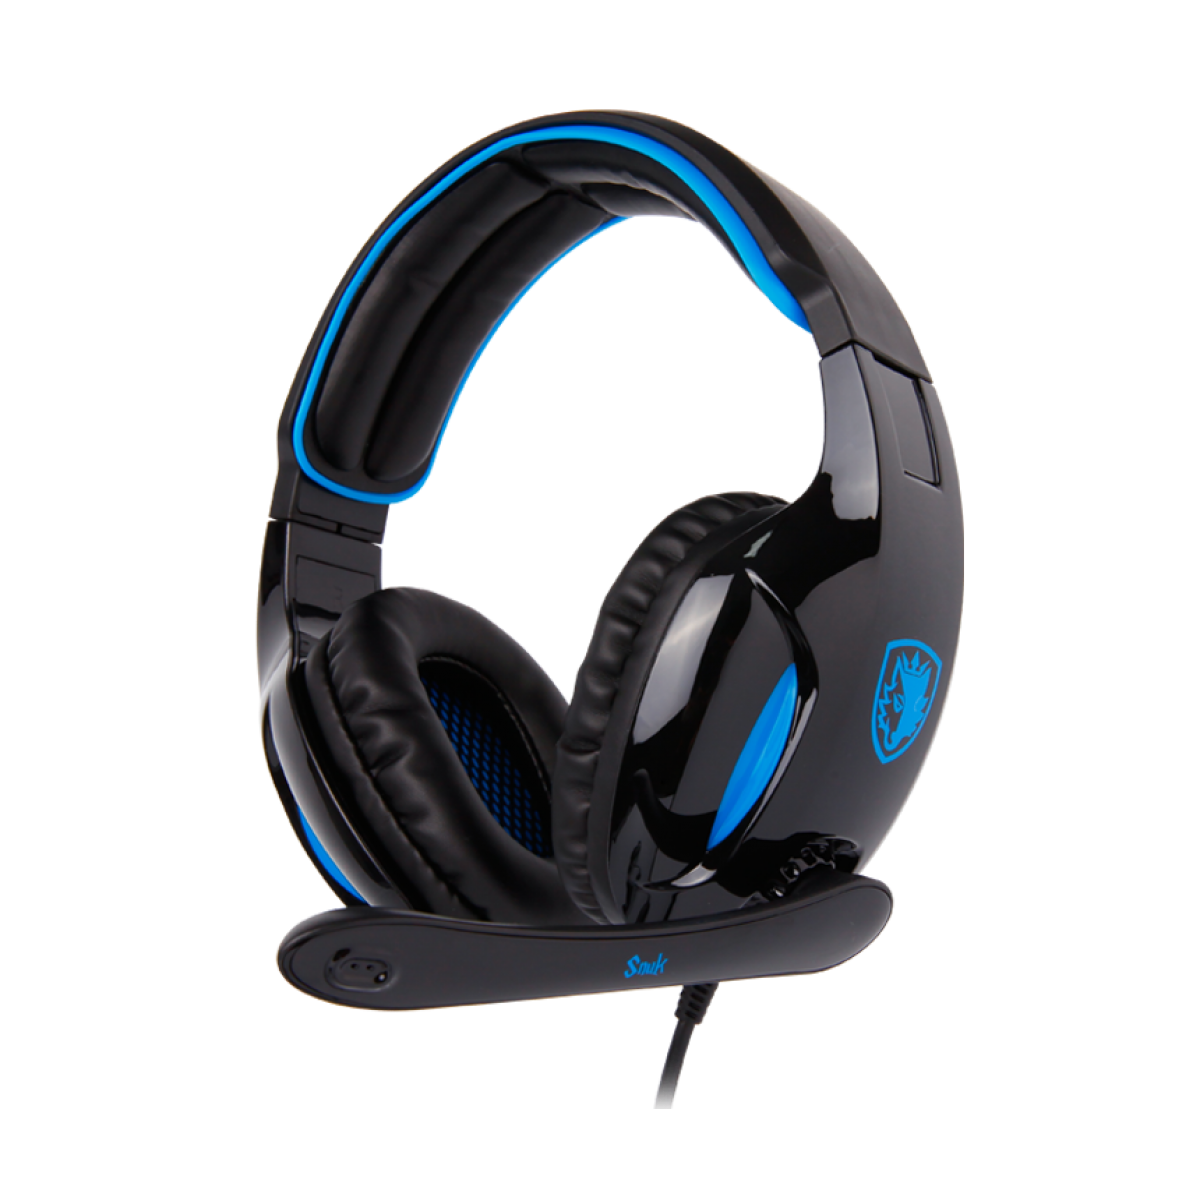 Headset Gamer Sades Sa-902 Snuk, Surround 7.1, Black/Blue, Sa-902